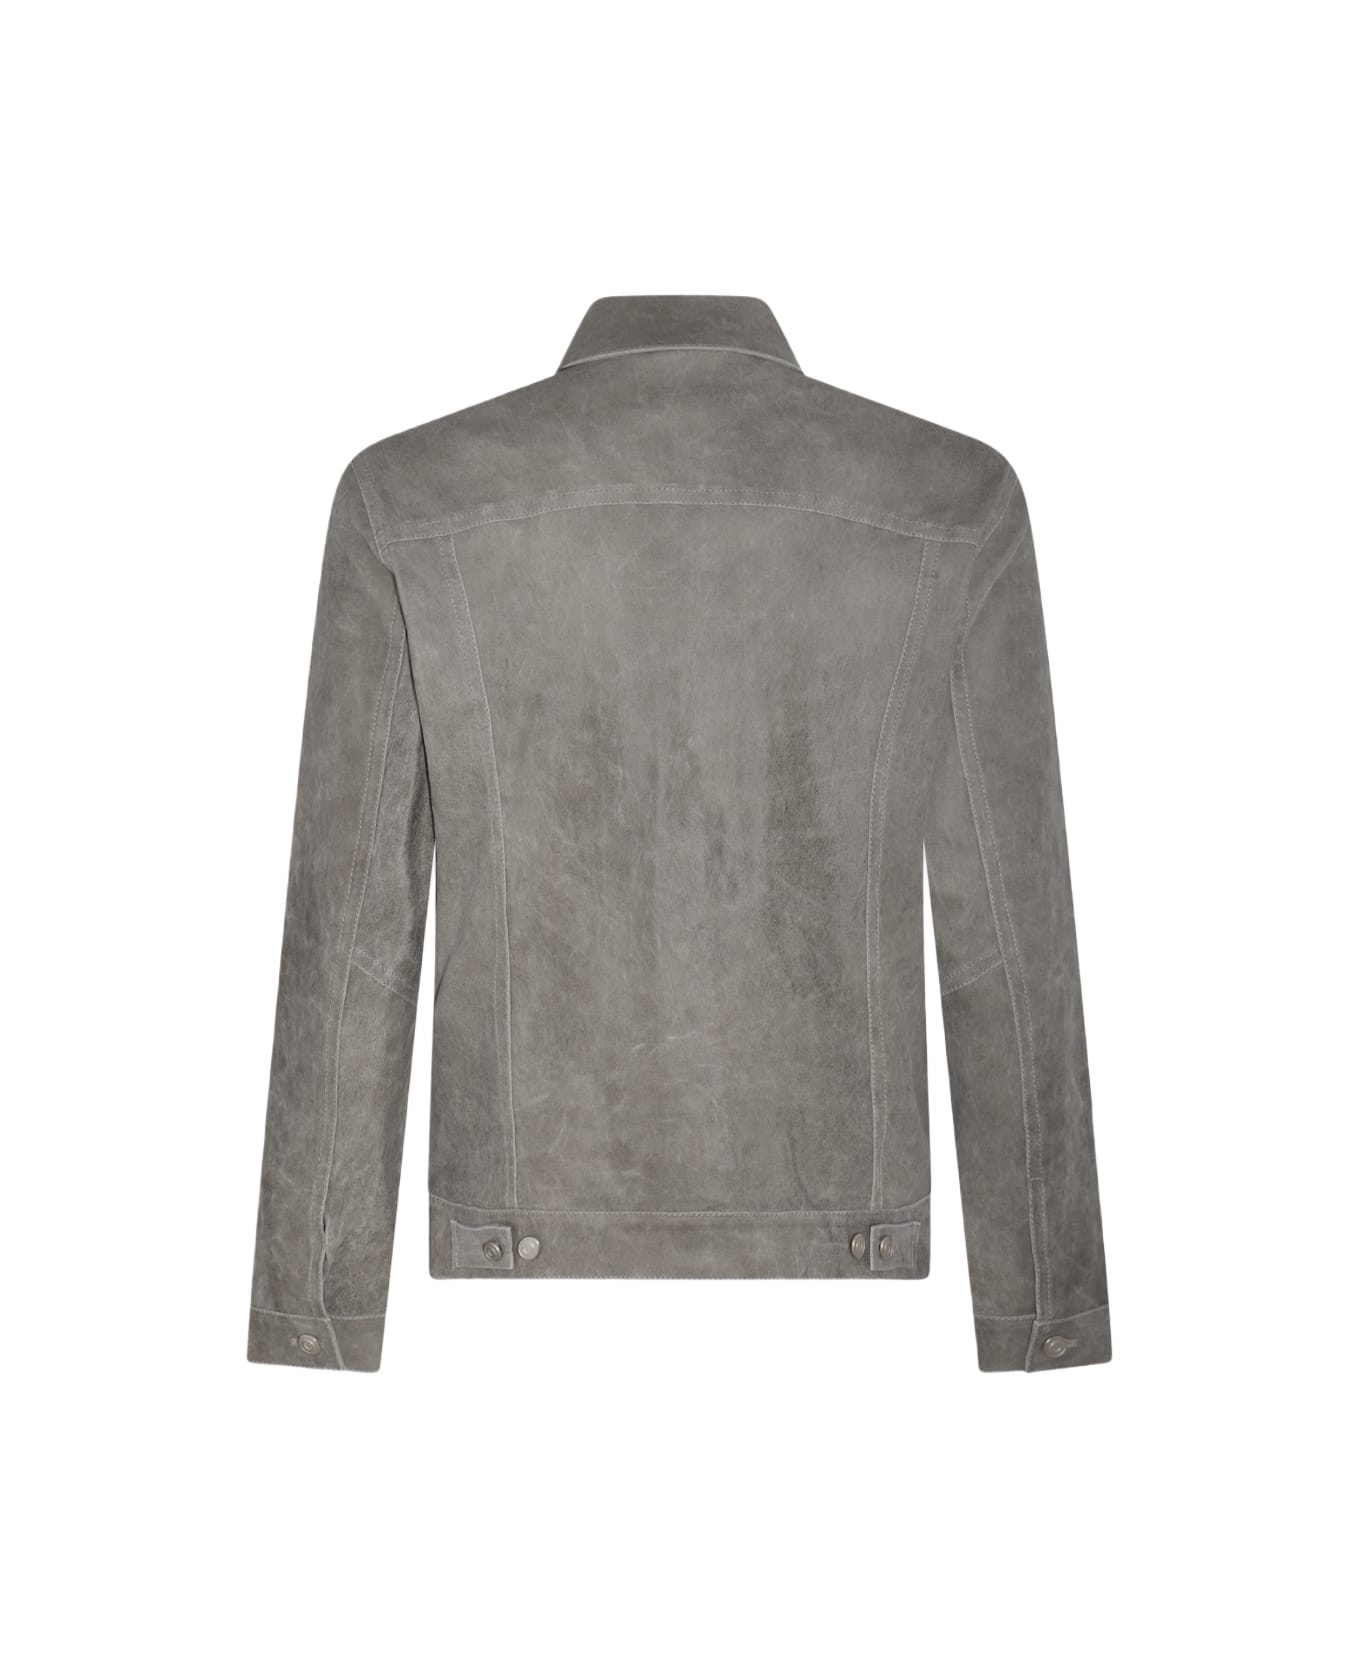 Giorgio Brato Grey Leather Jacket レザージャケット